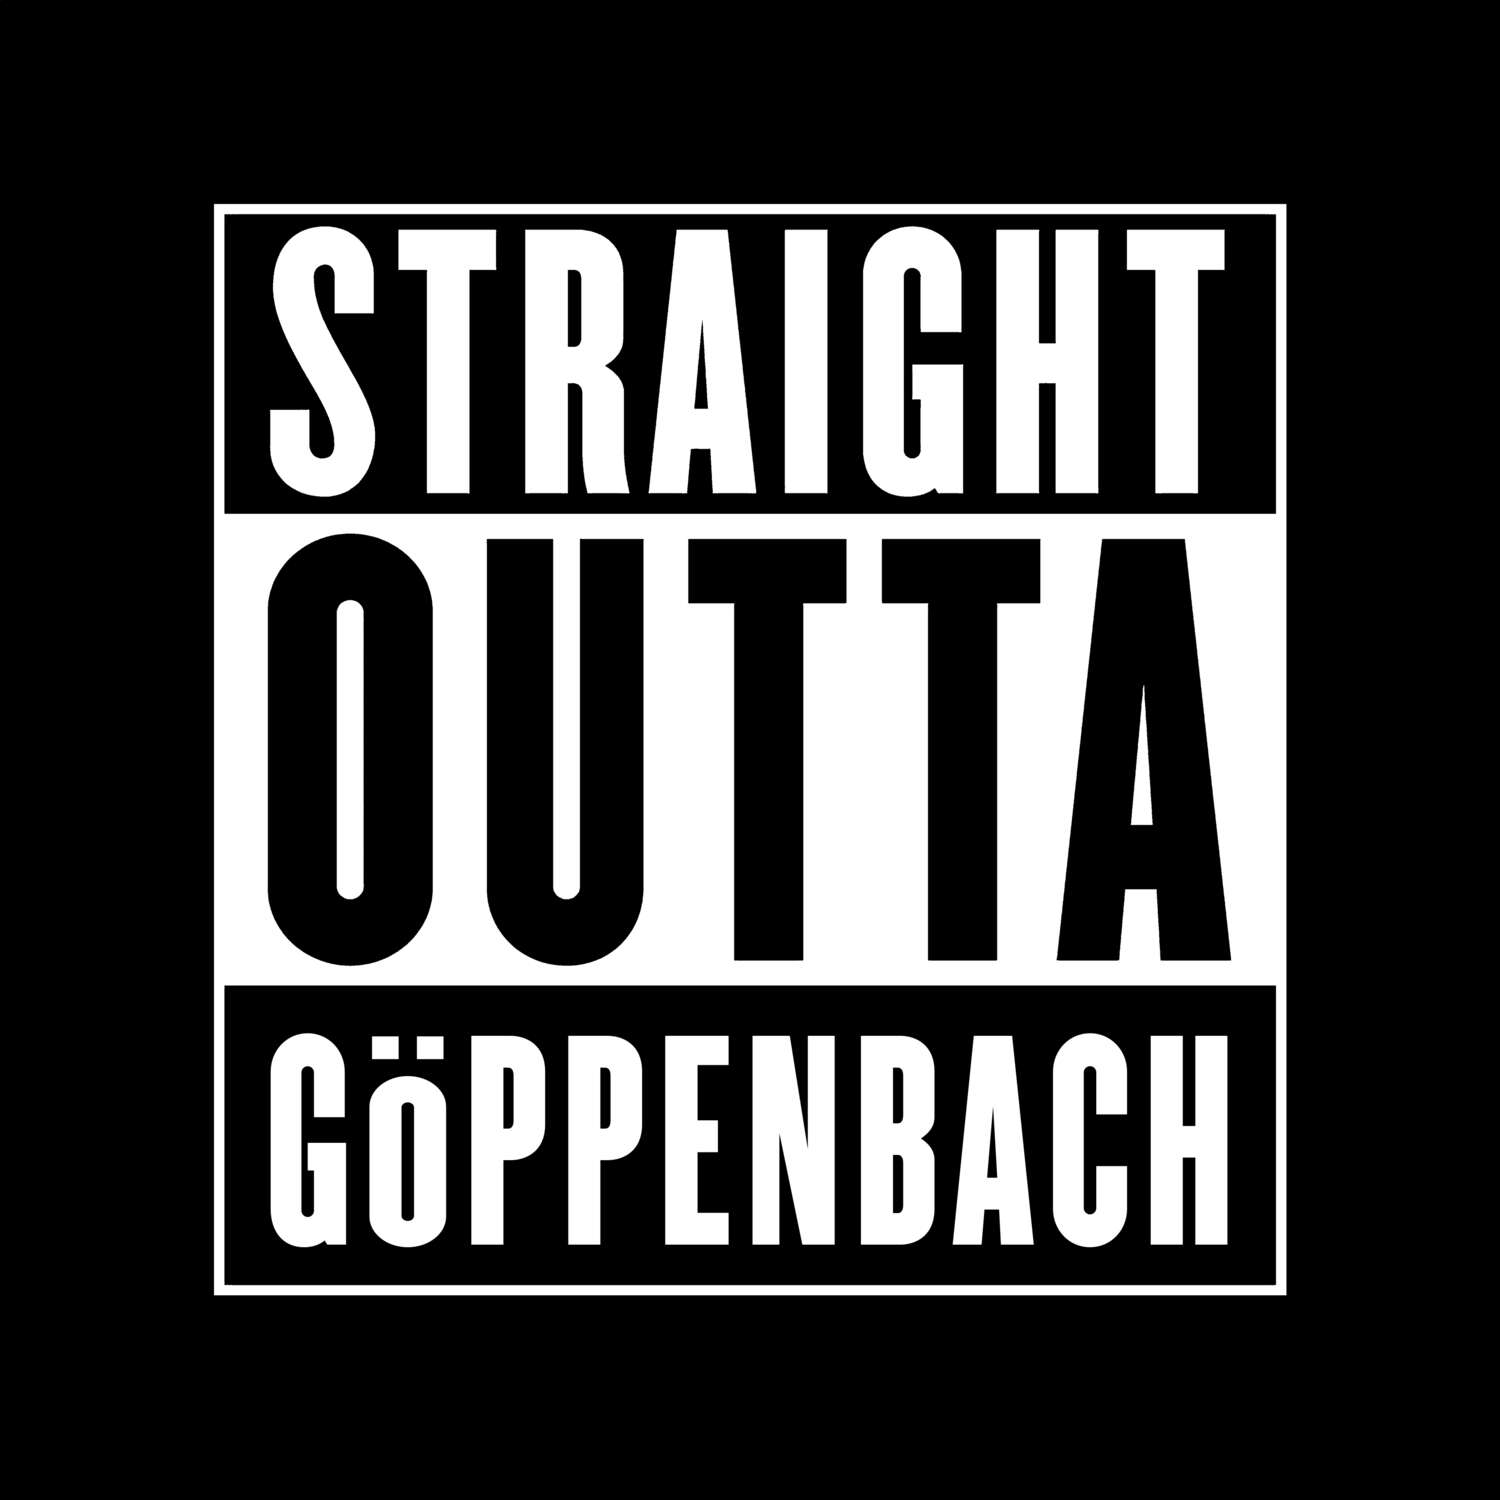 Göppenbach T-Shirt »Straight Outta«